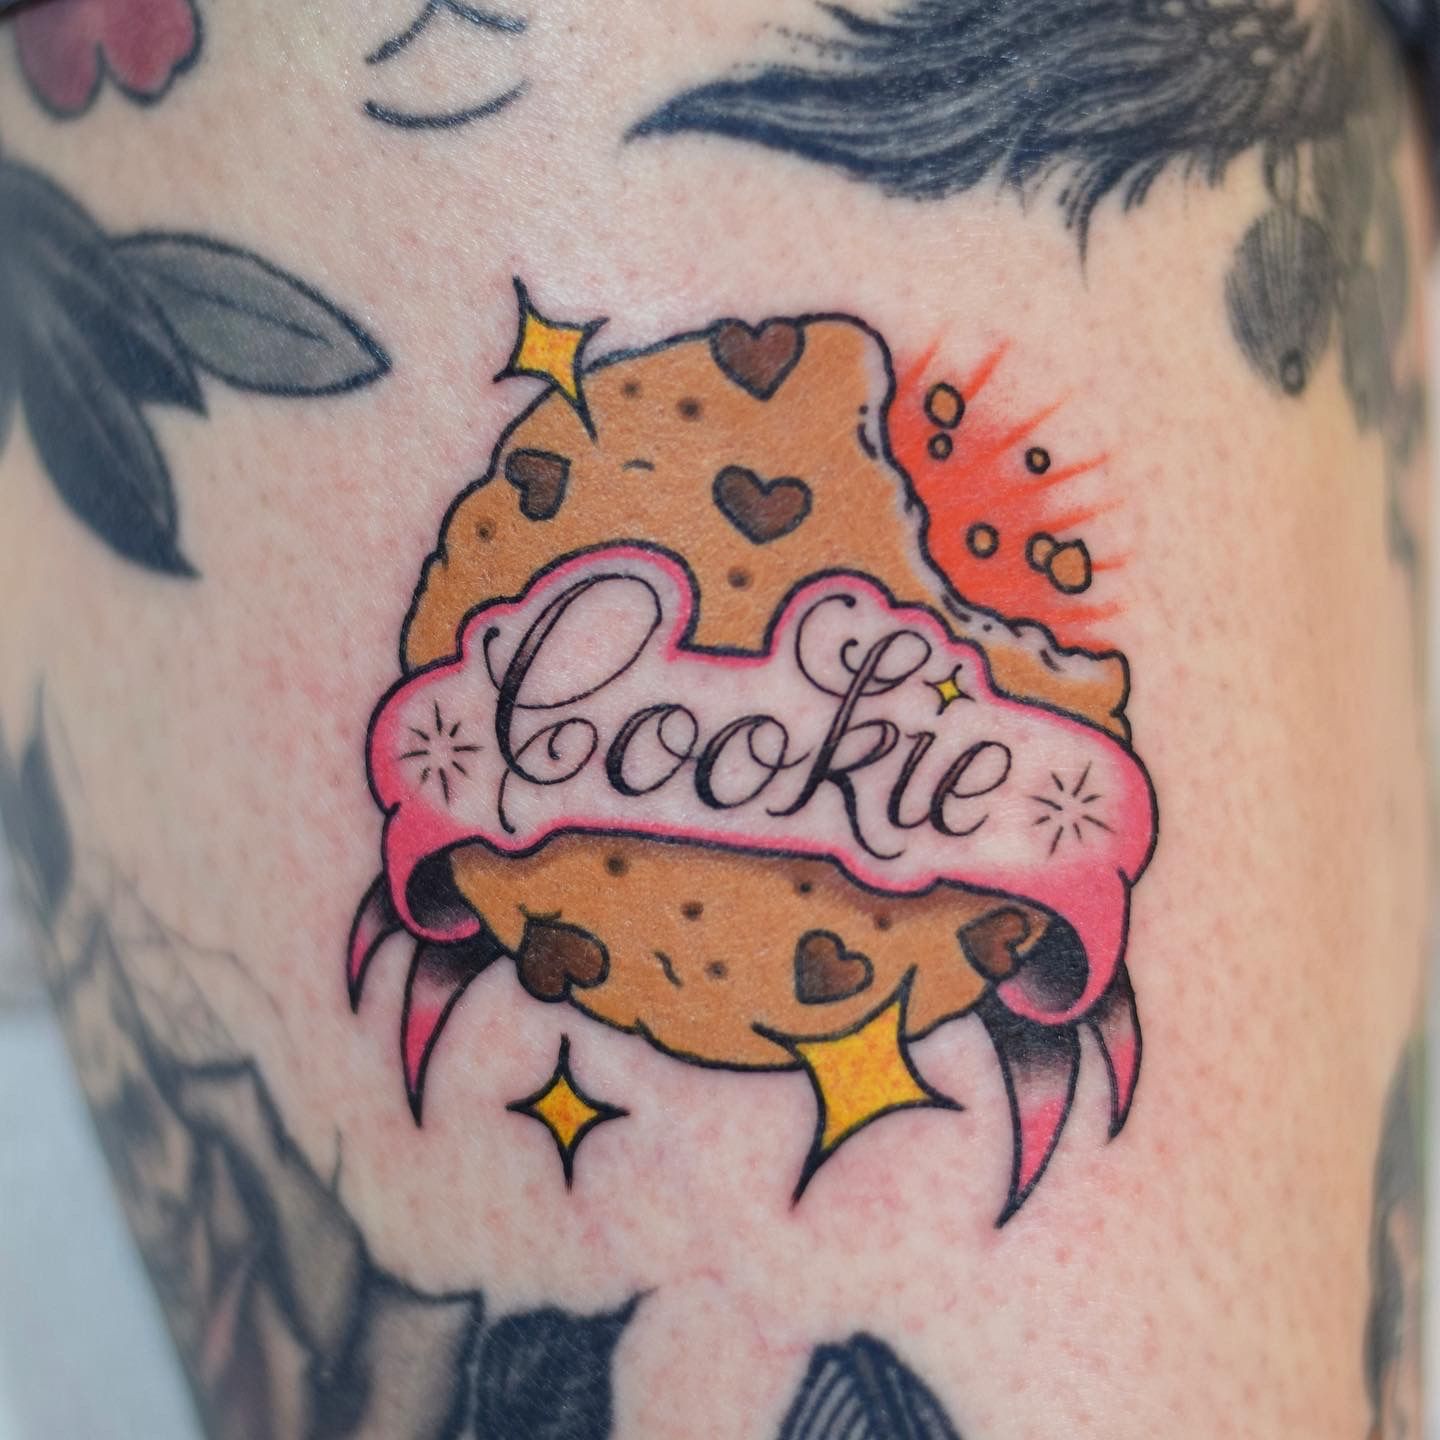 Cookie tattoo ideas